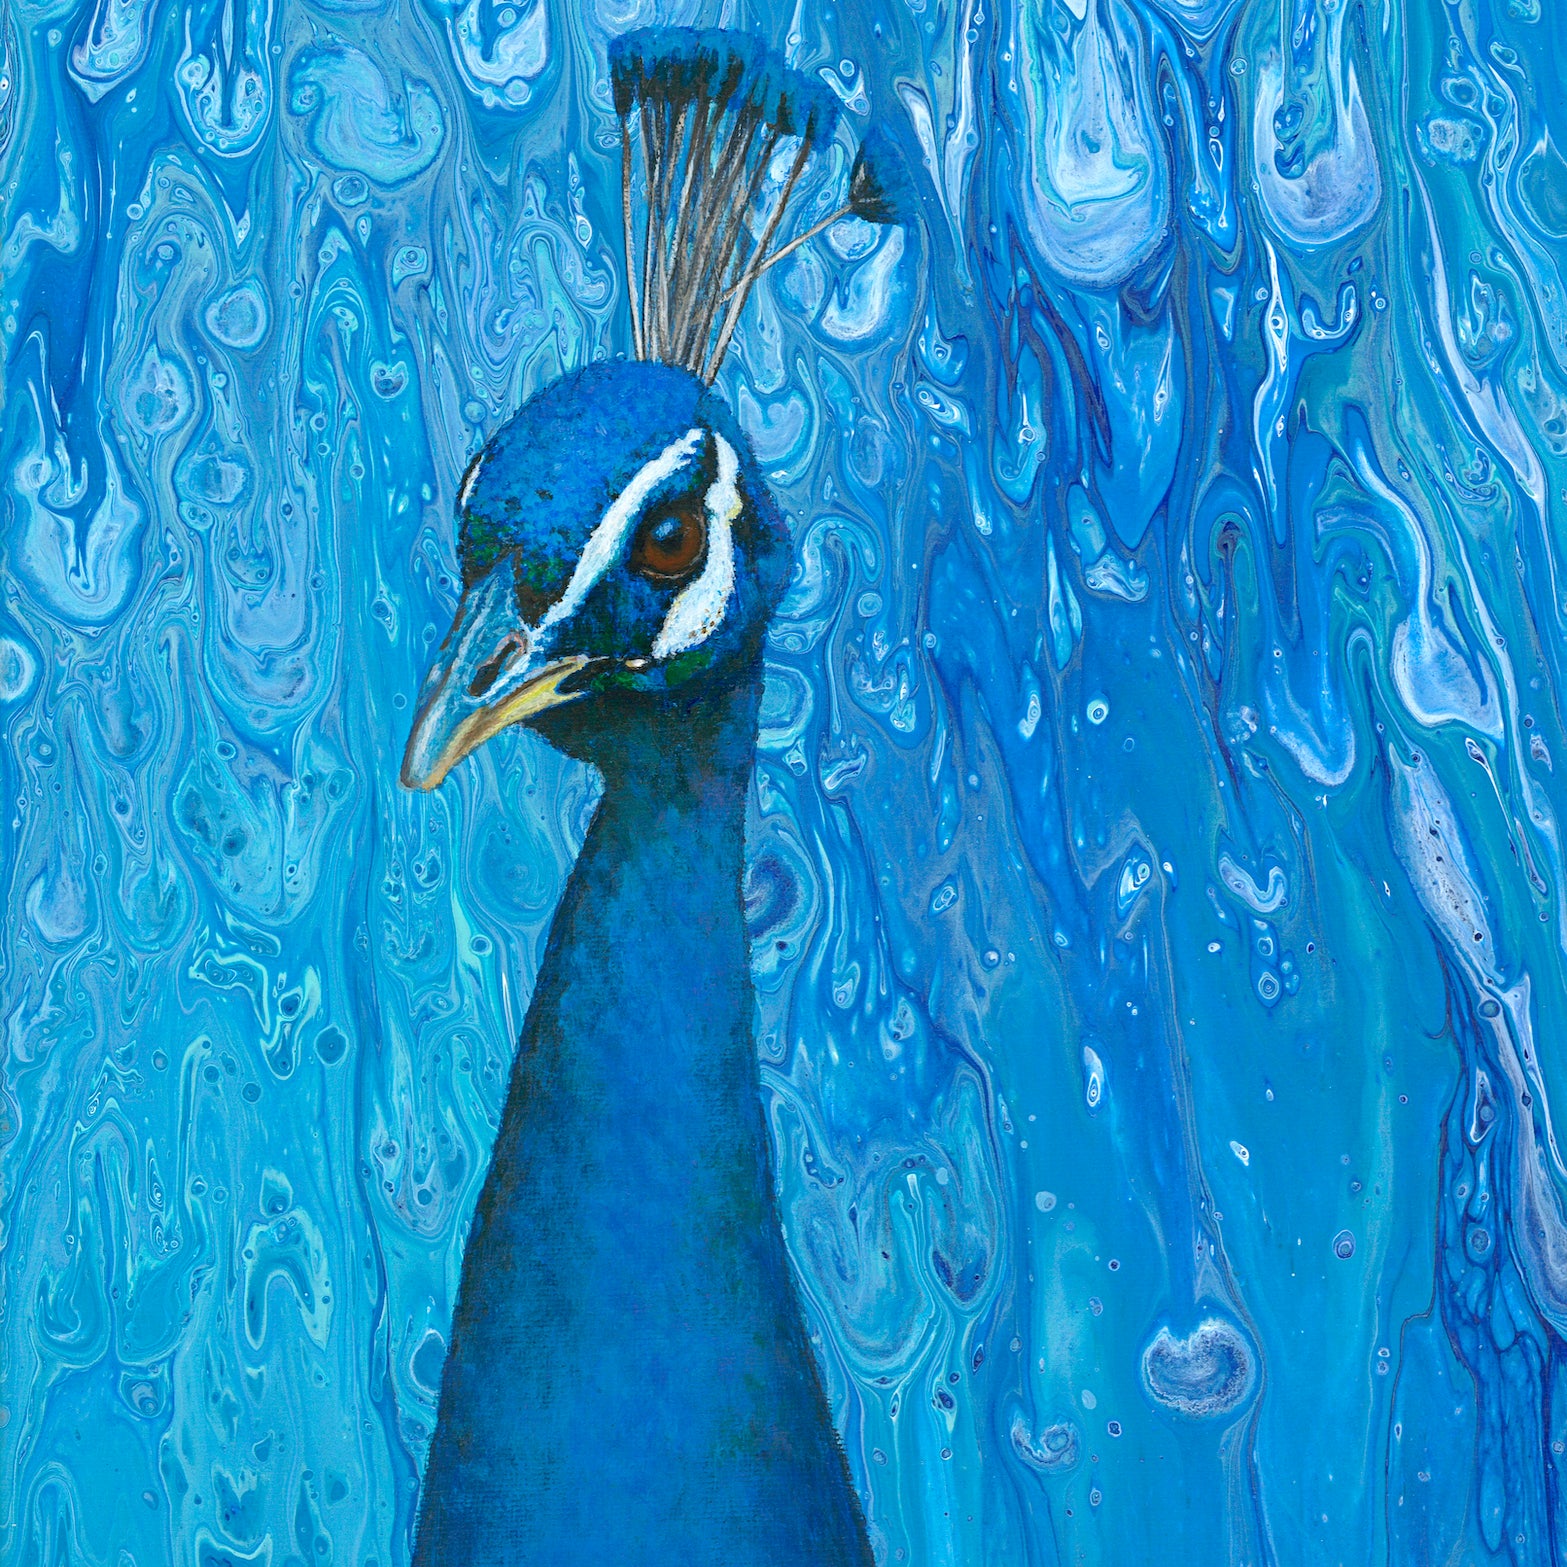 Peacock Paintings | Paintings of Peacocks | Peacock Artwork | Peacock Canvas Painting